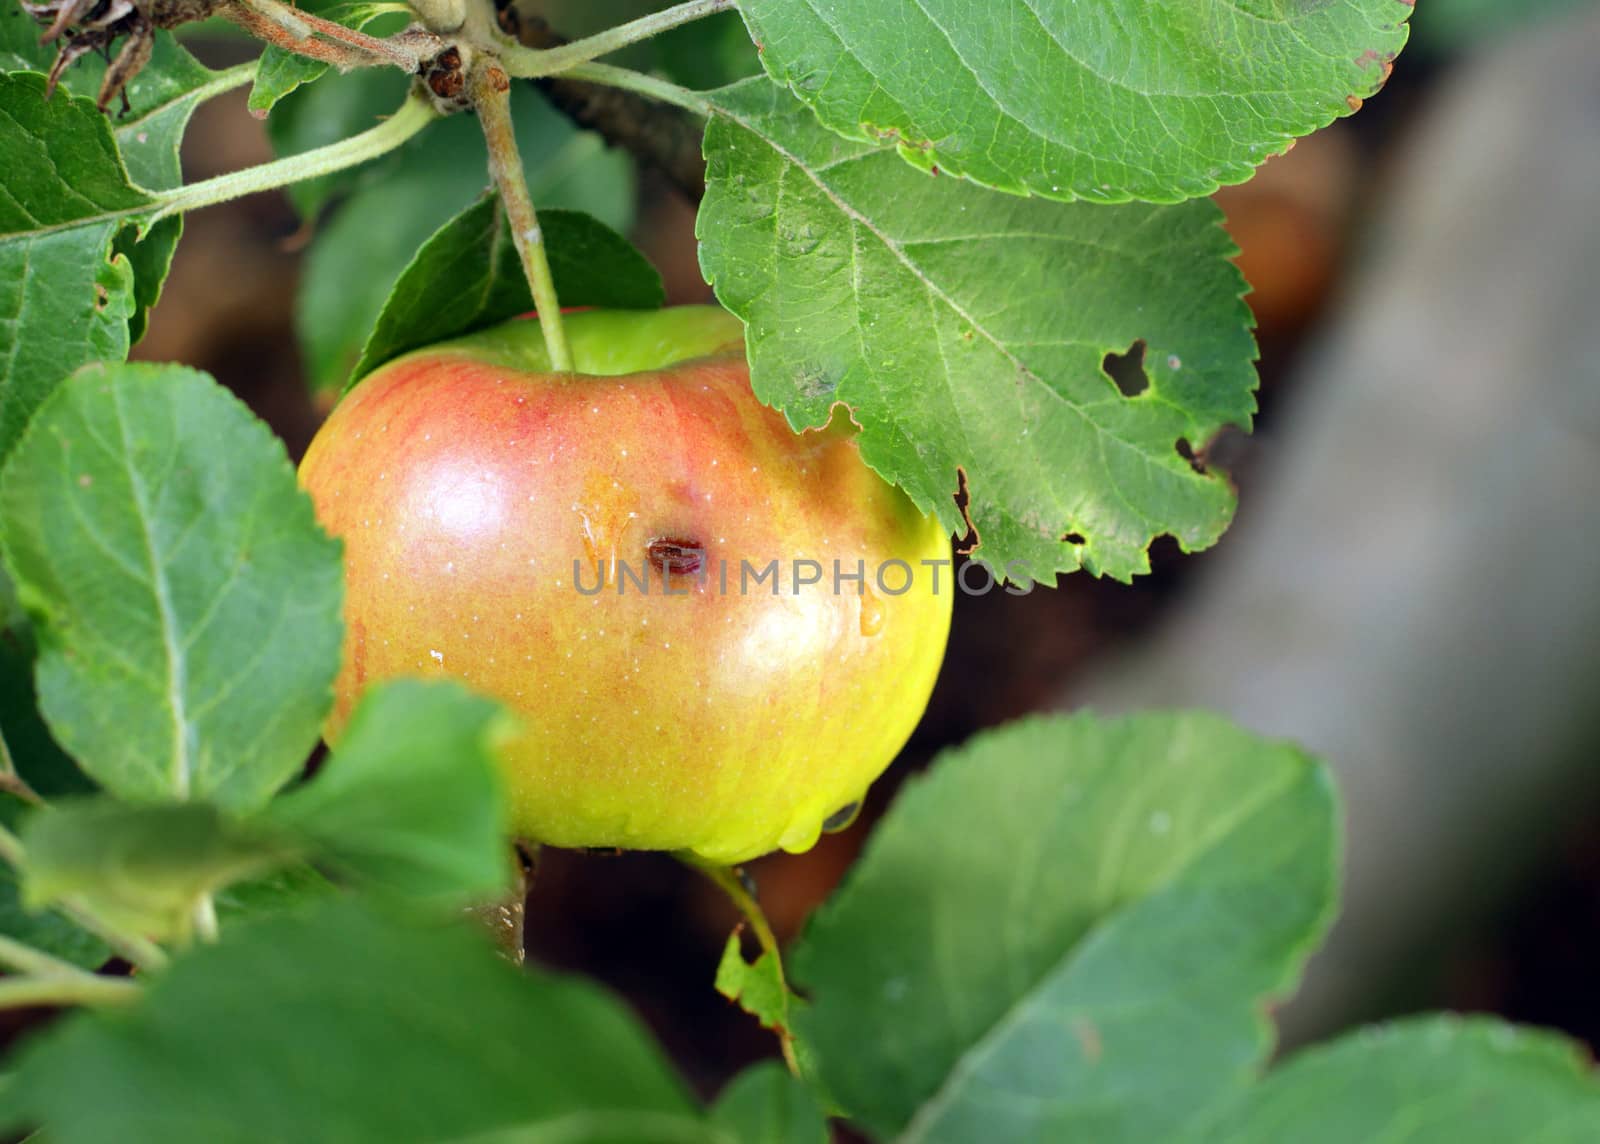 Eco apple growing on tree in summer